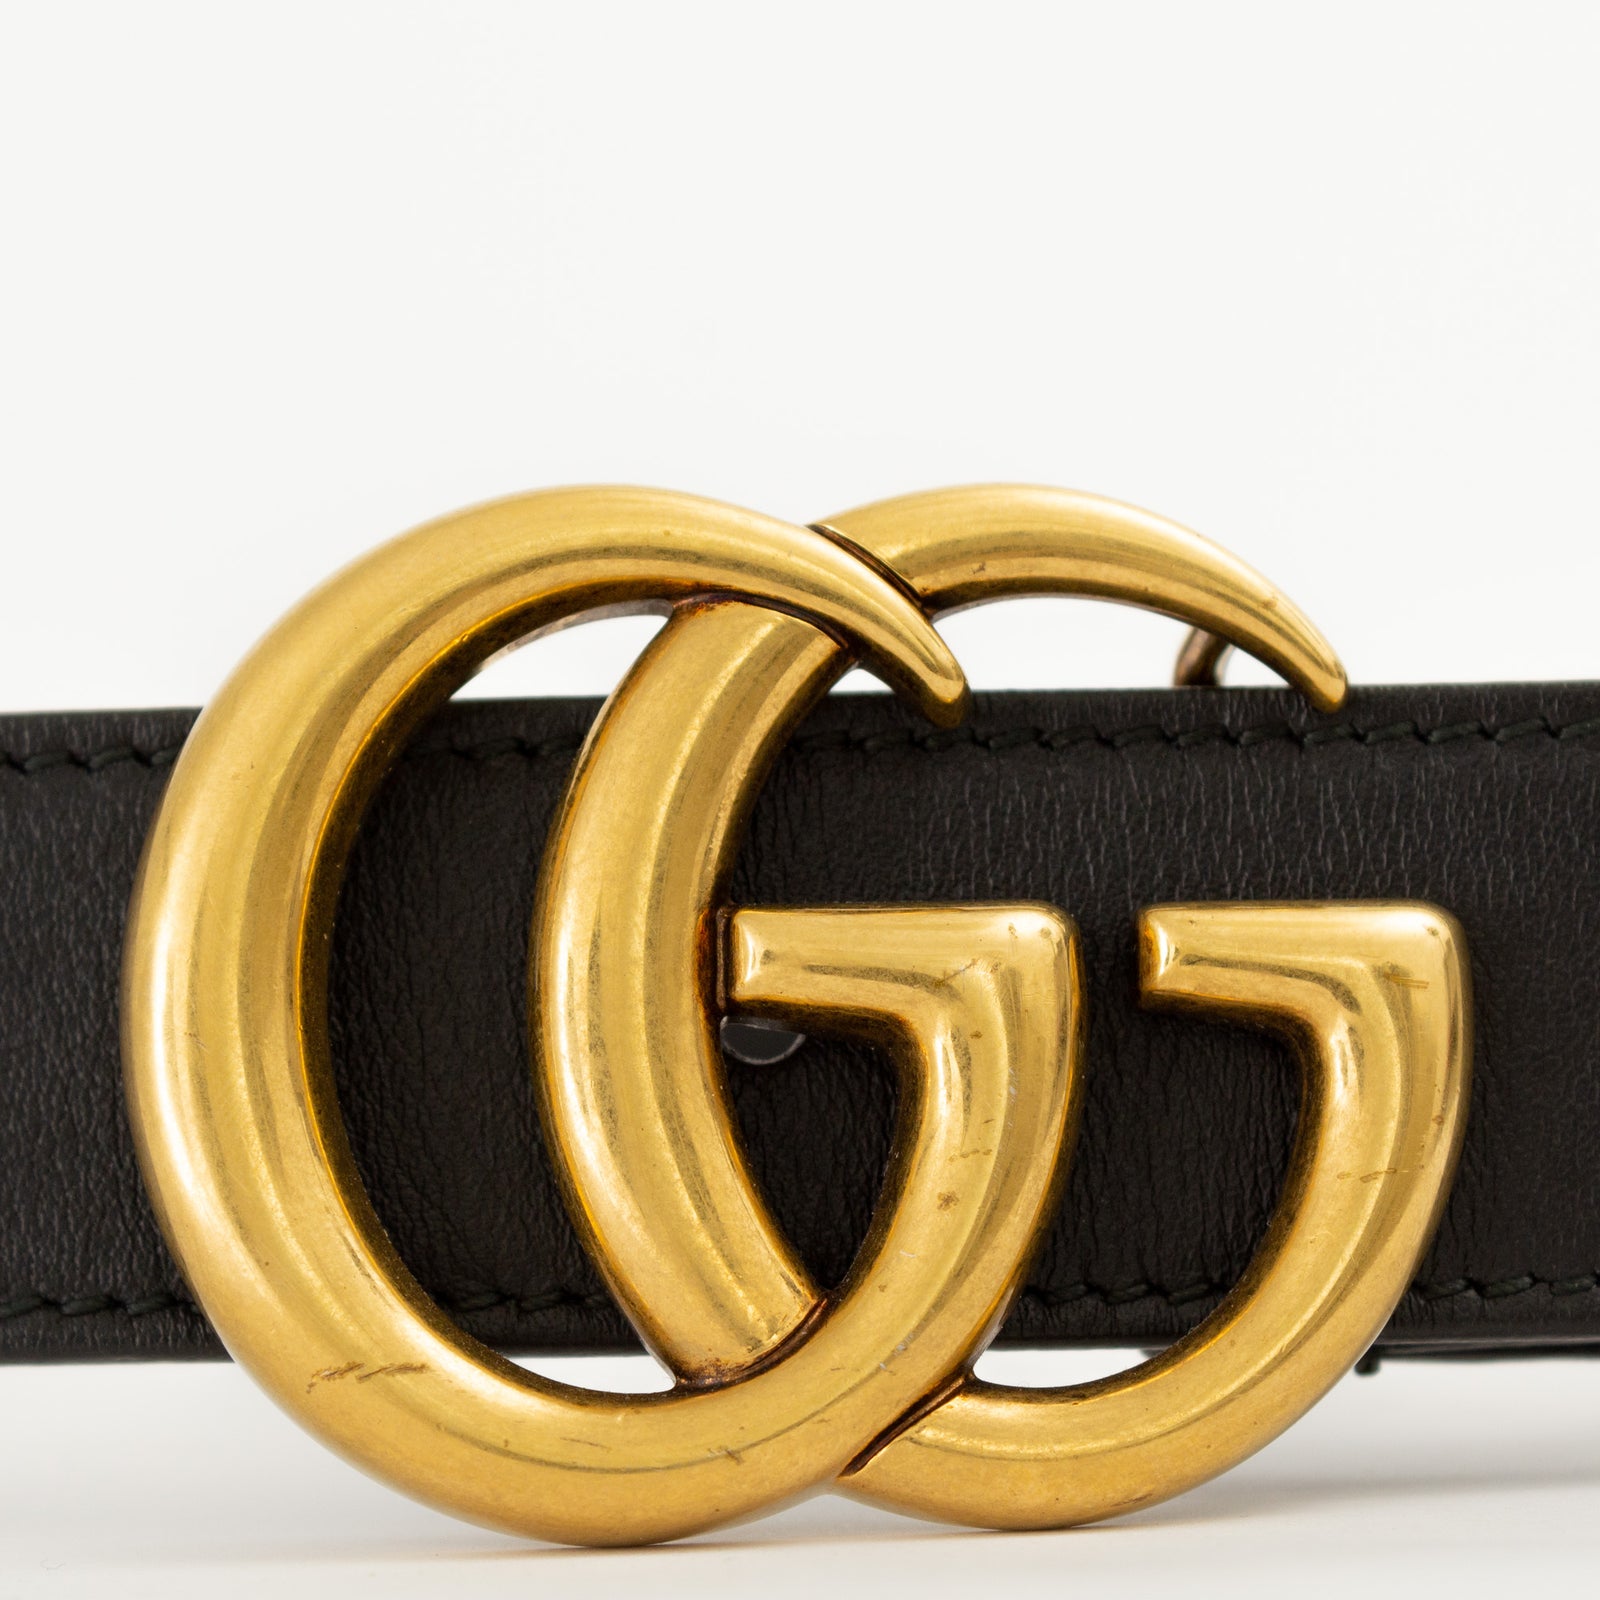 Gucci Men's Double G Buckle Leather Belt